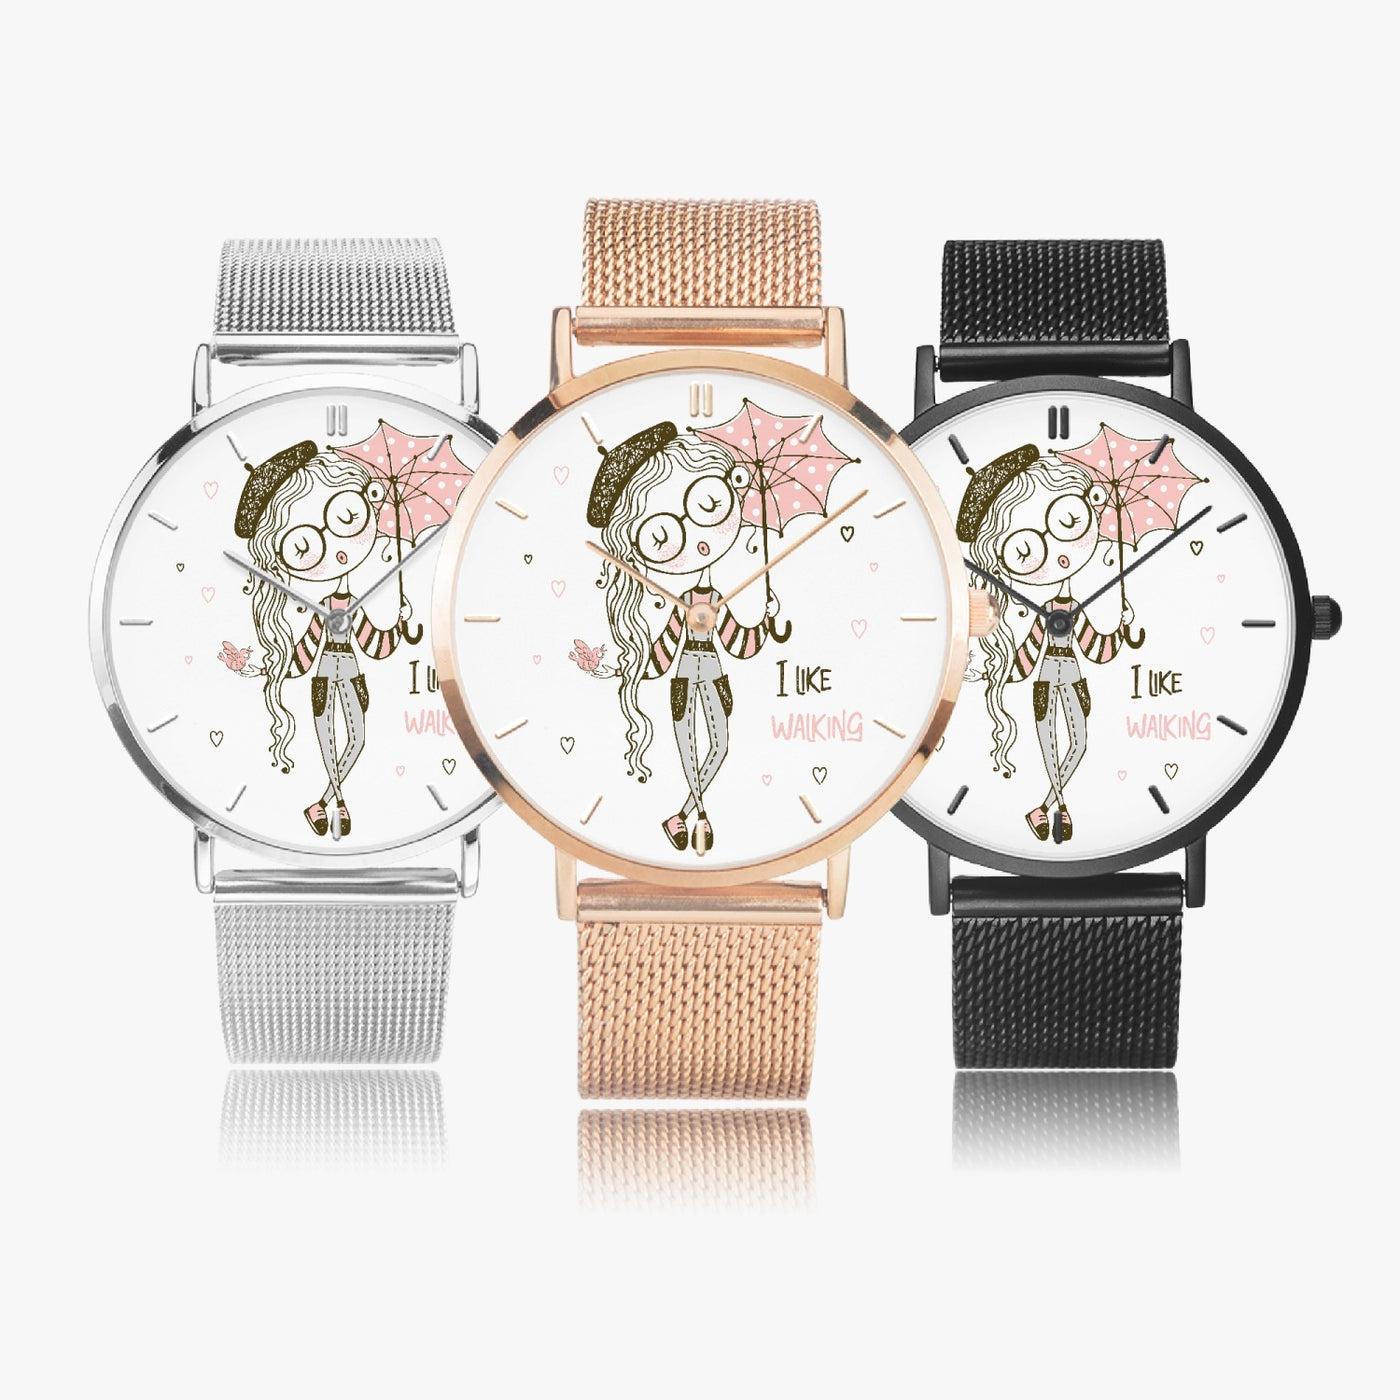 I Like Walking - Fashion Ultra-thin Stainless Steel Quartz Watch (With Indicators)